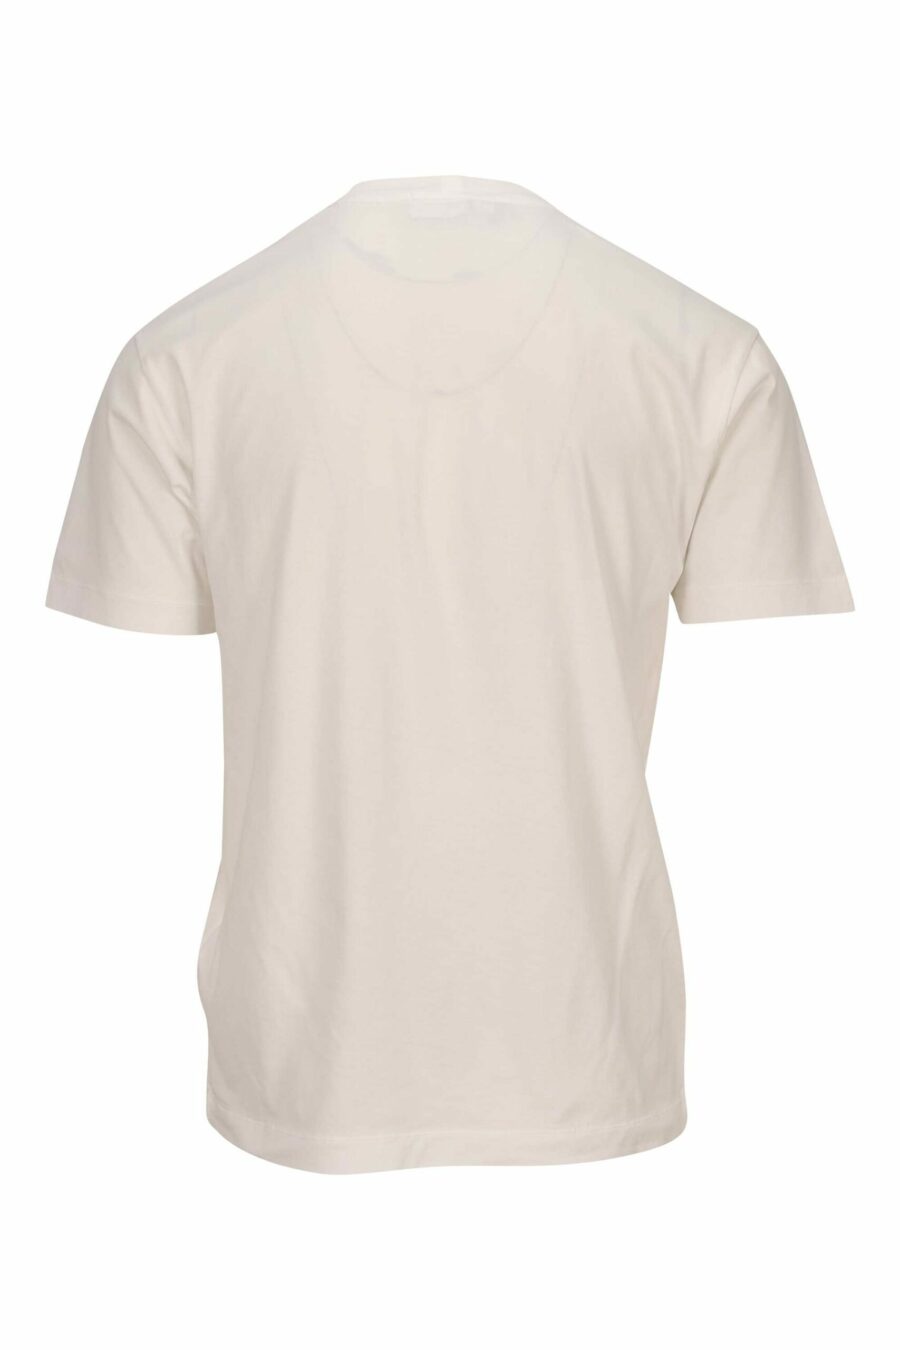 Camiseta blanca con minilogo parche brújula - 8052572855146 1 scaled